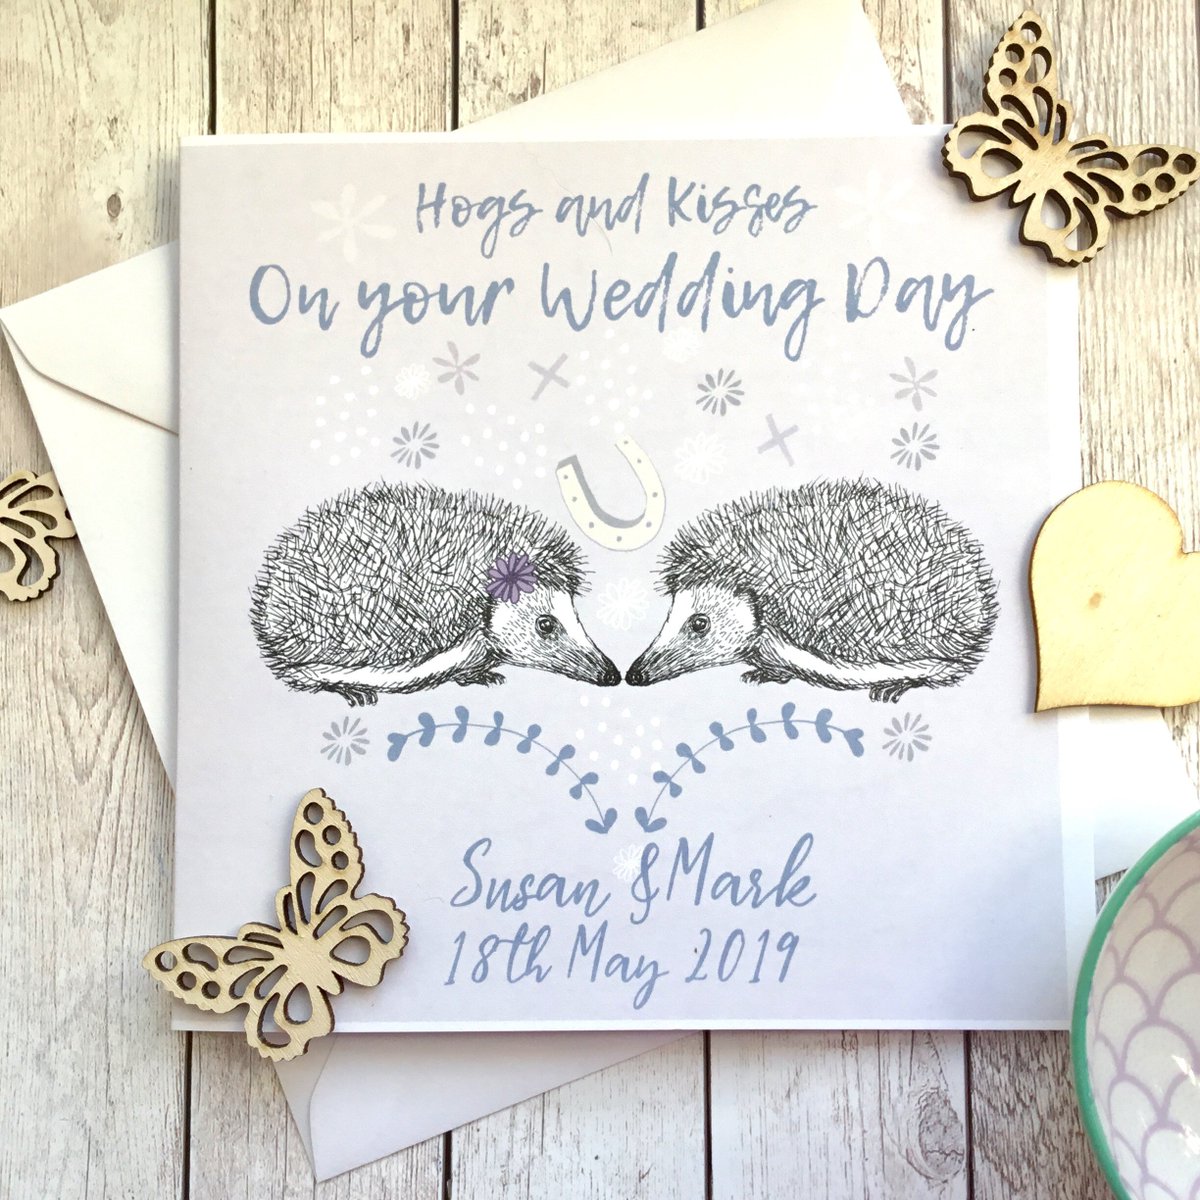 Personalised Hedgehog Wedding Card - Hogs and Kisses - Wedding Date - Hedgehog Lover Card - Card For Friends - Custom Marriage Card. tuppu.net/48d75c0d #Slumbermonkey #Etsy #CustomWeddingCard